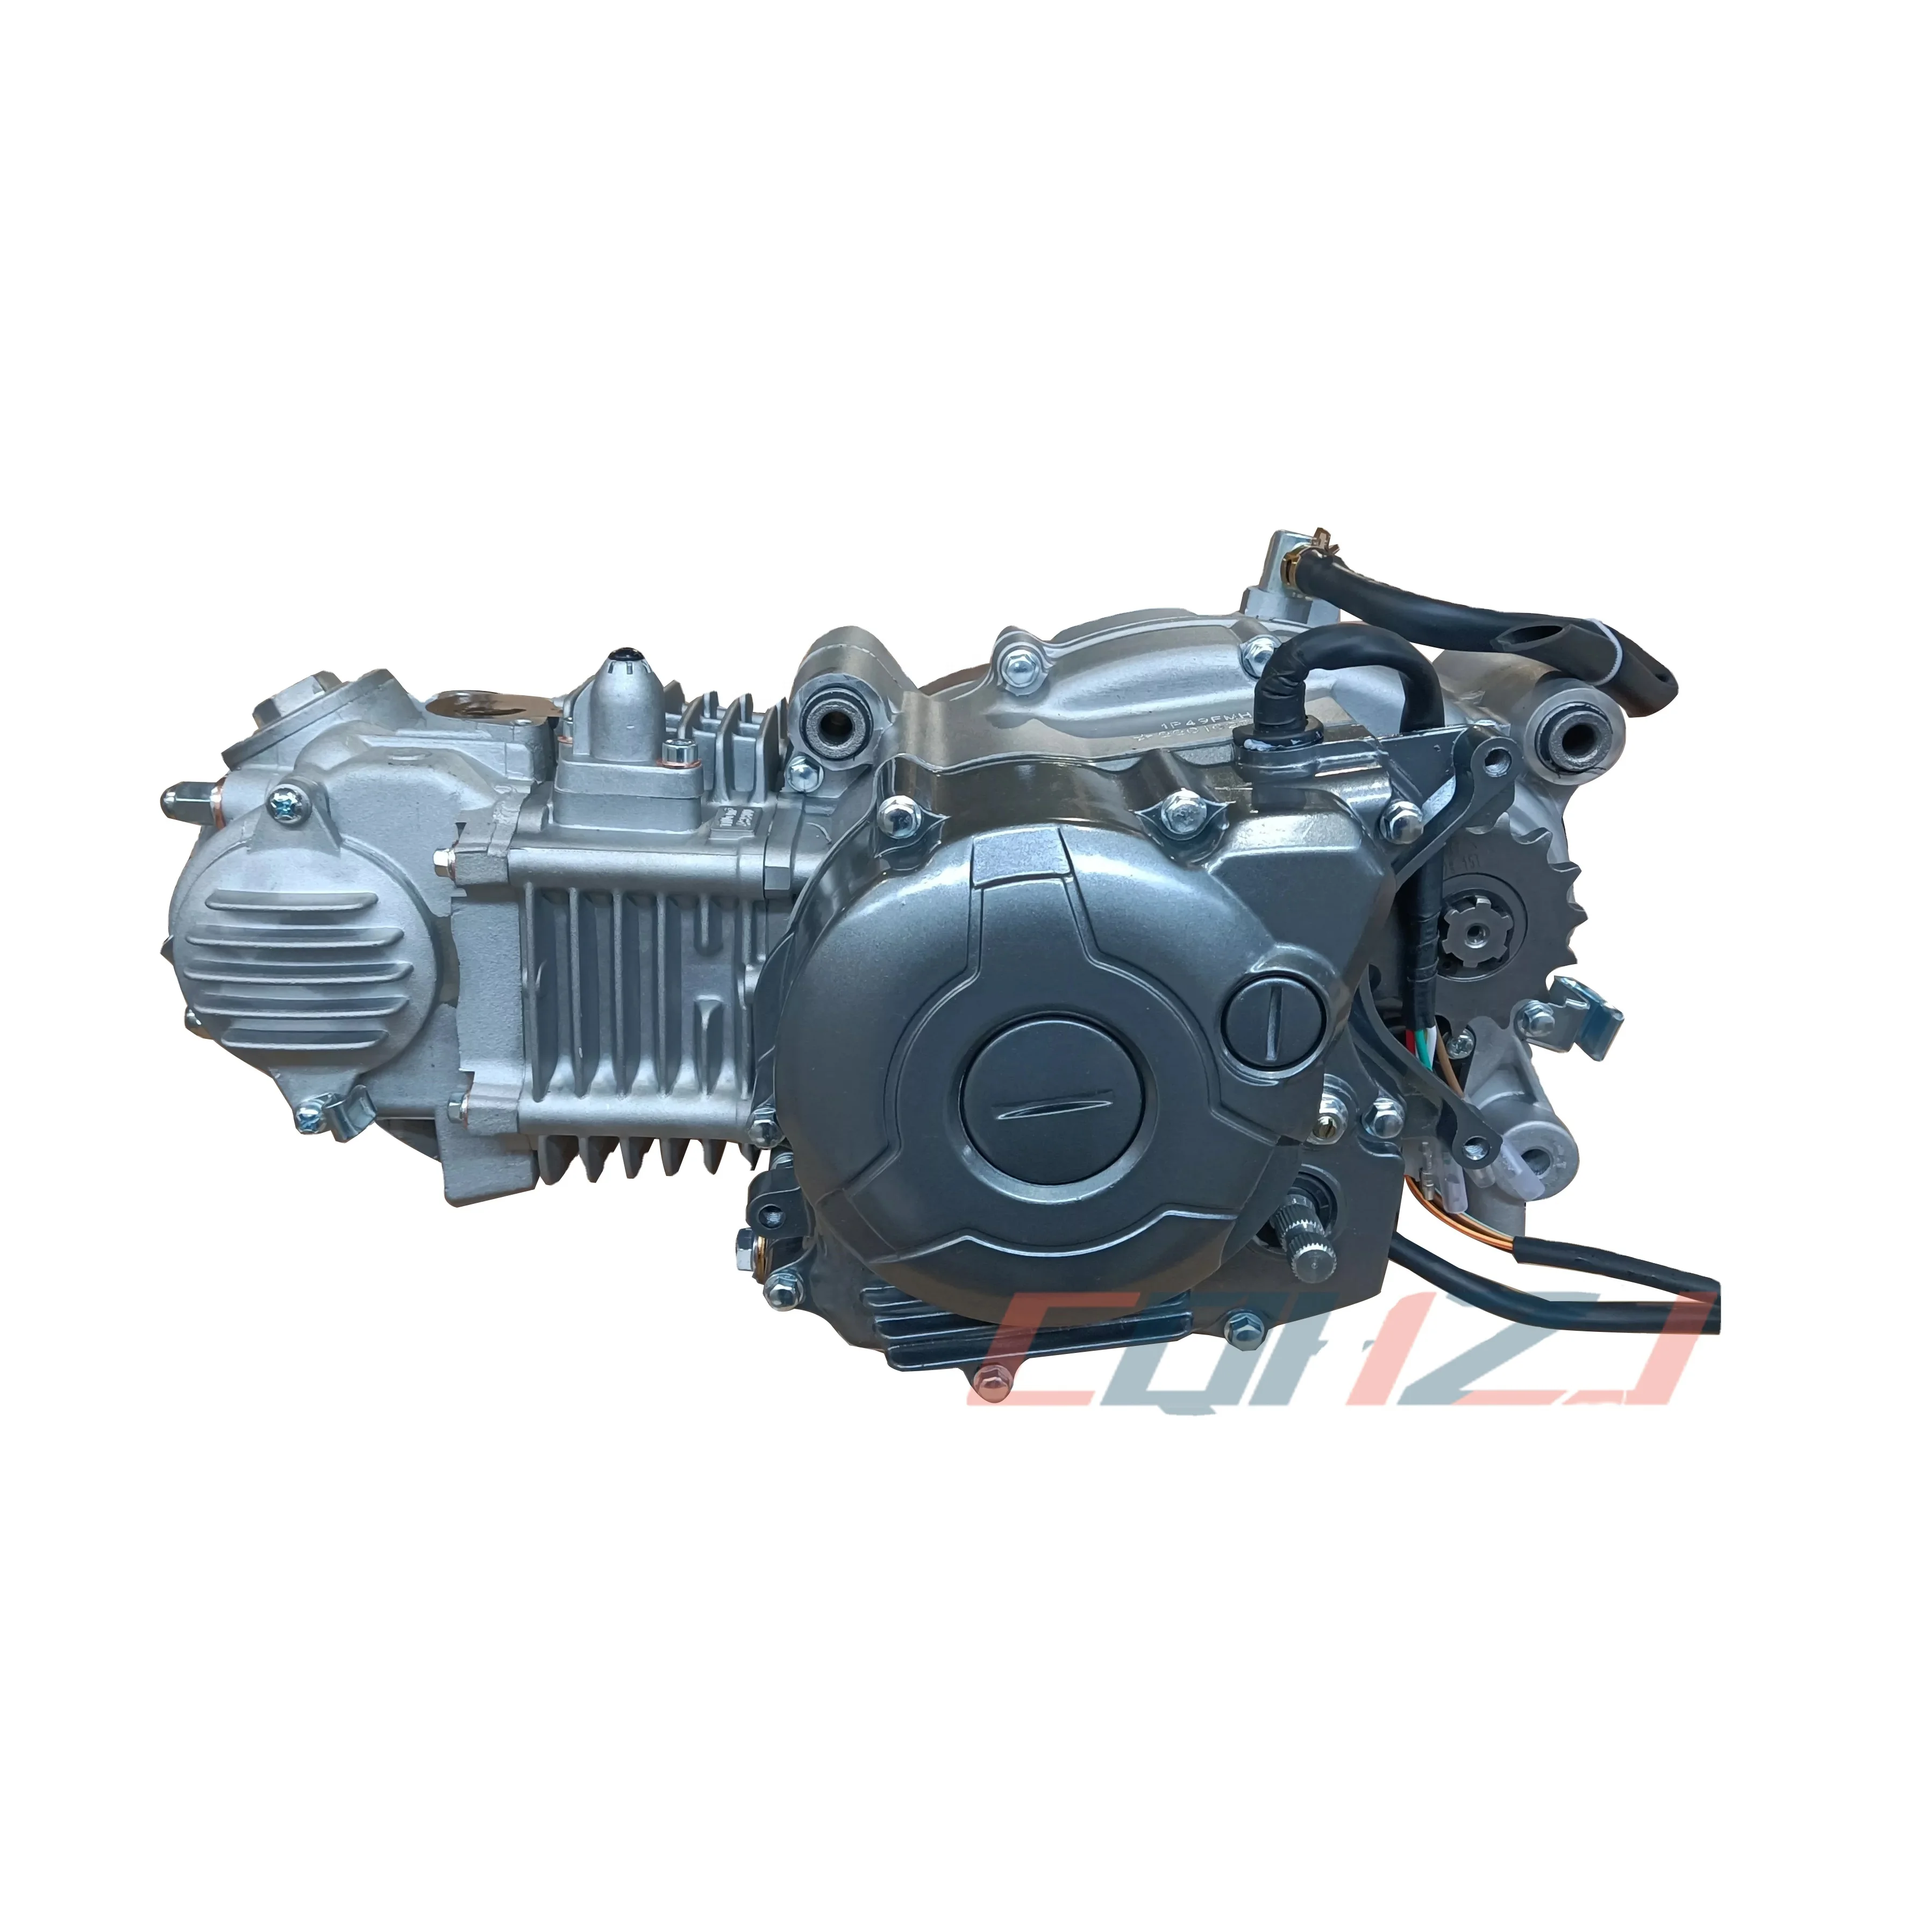 CQHZJ Factory Direct Sale Motorcycle Engines Assembly JY110 YB110 YBR125 YBR150 Air-Cooled Engine